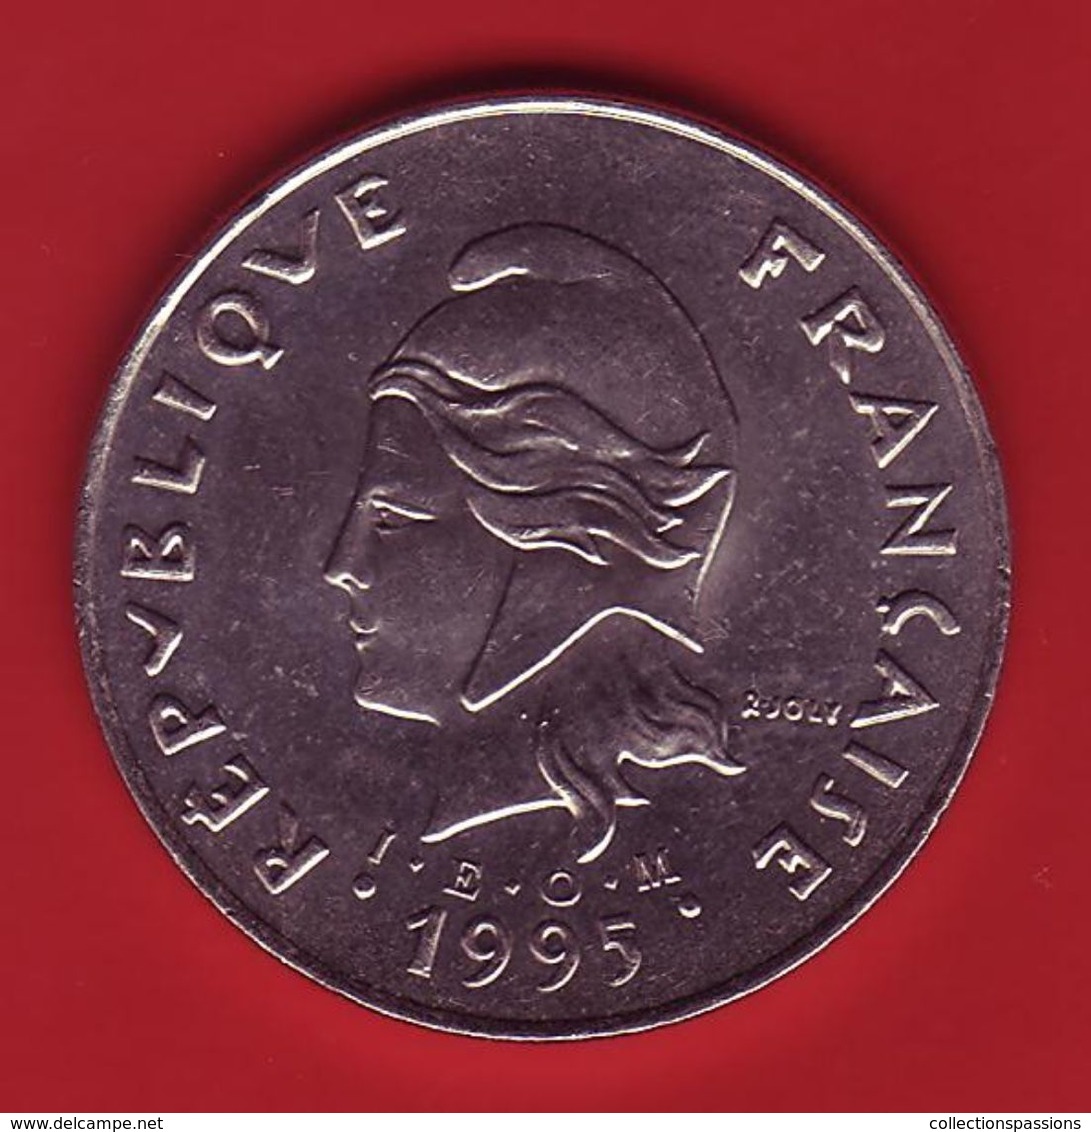 - POLYNESIE FRANCAISE - 50 Francs - 1995 - - Polynésie Française